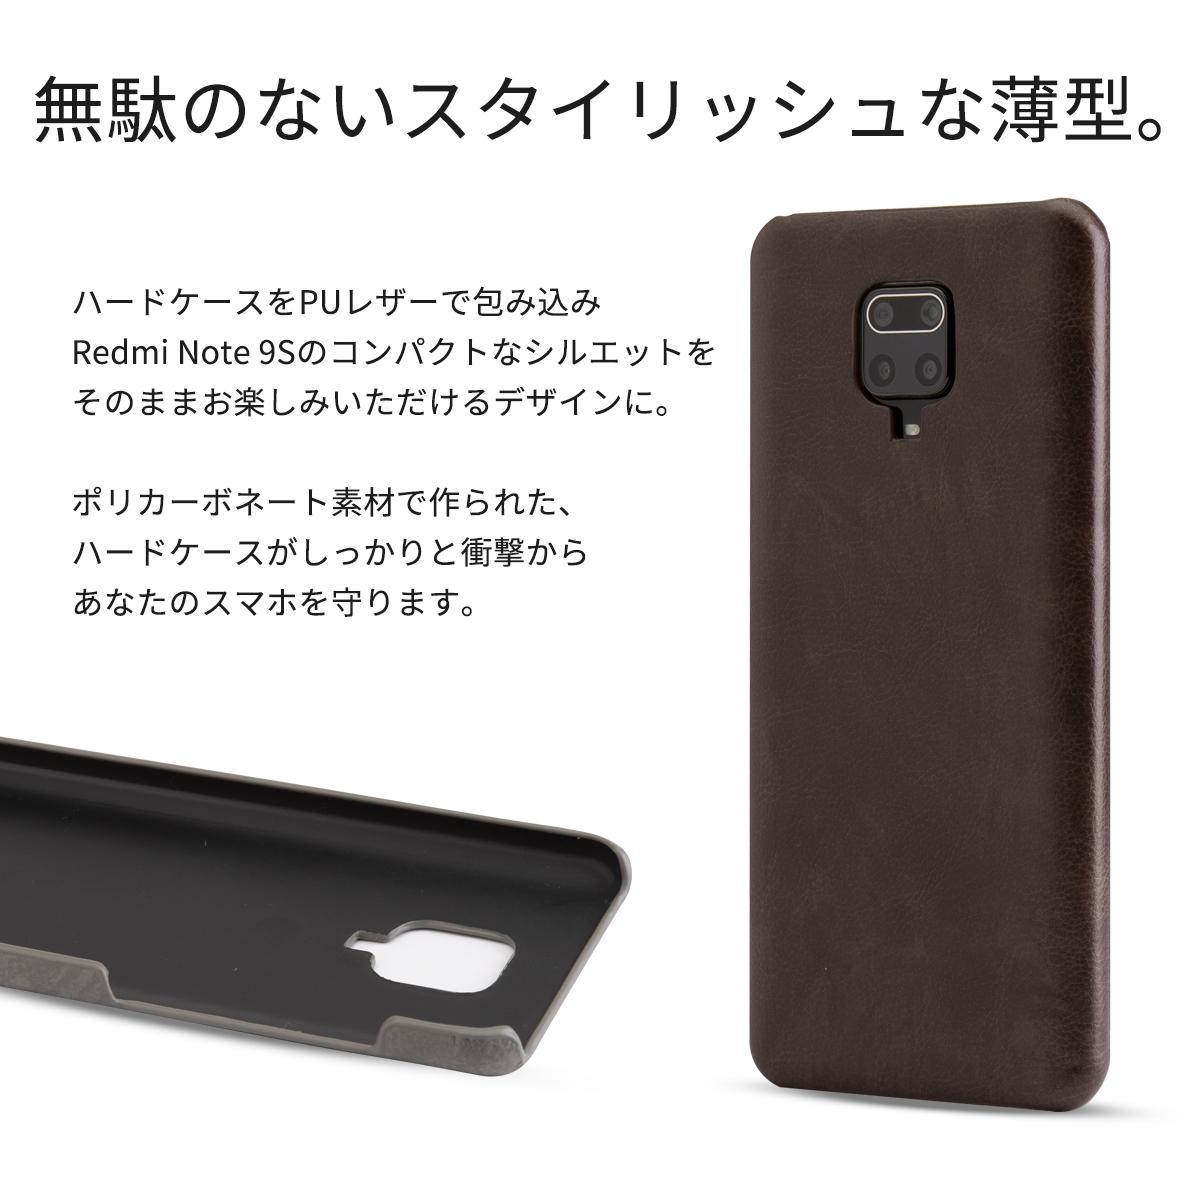 Redmi Note 9S レザーハードケース